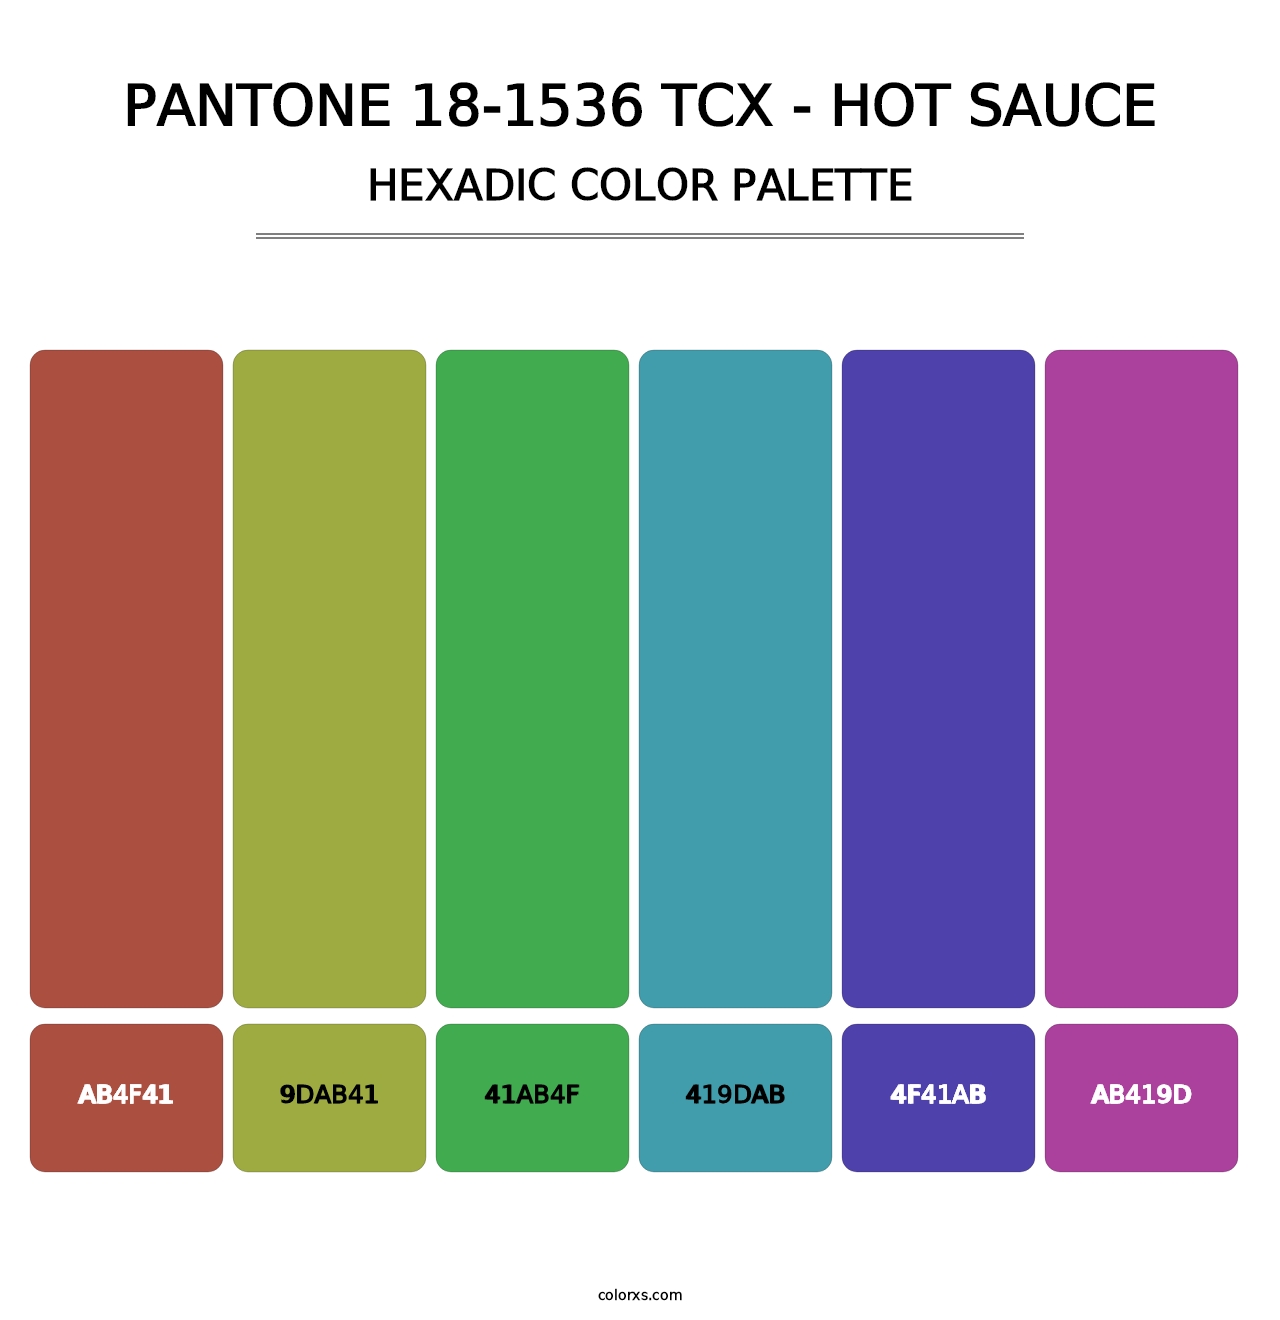 PANTONE 18-1536 TCX - Hot Sauce - Hexadic Color Palette